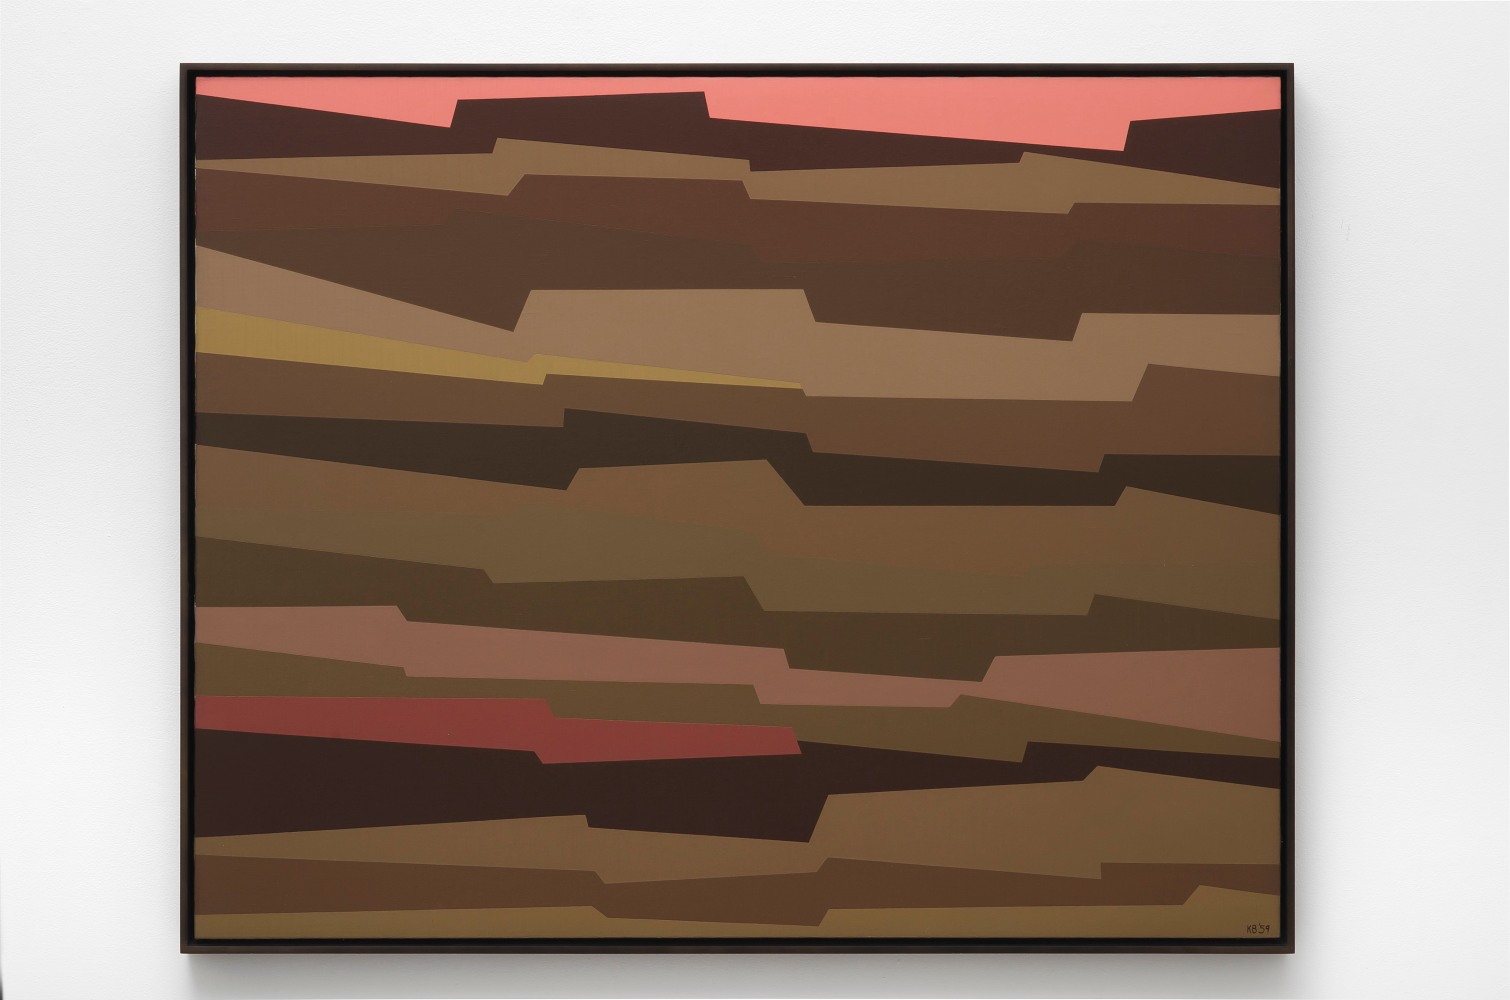 Karl Benjamin (1925-2012)&amp;nbsp;
Interlocking Forms (amber,umber,yellow,crimson), 1959
oil on canvas
40 x 50 inches; 101.6 x 127 centimeters
LSFA# 01282